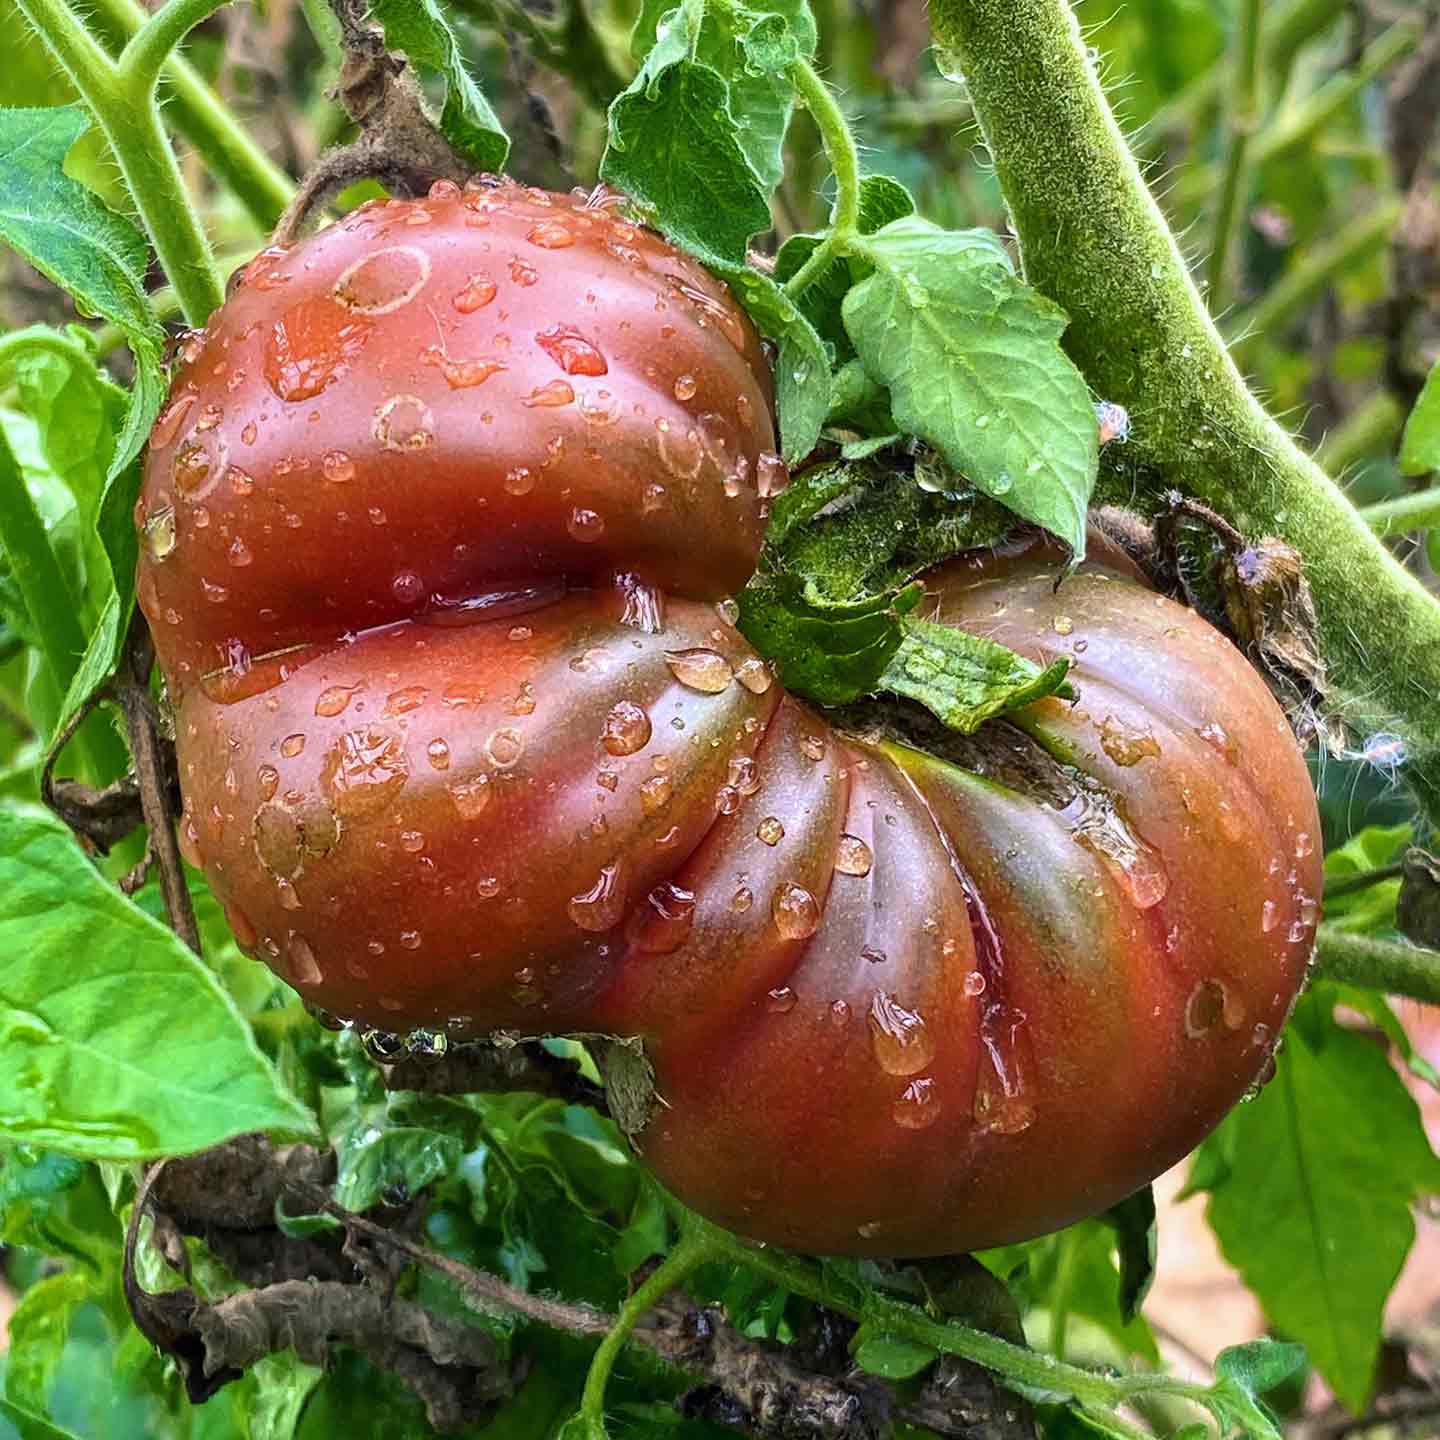 A vaguely threatening brandywine tomato, ripening nicely